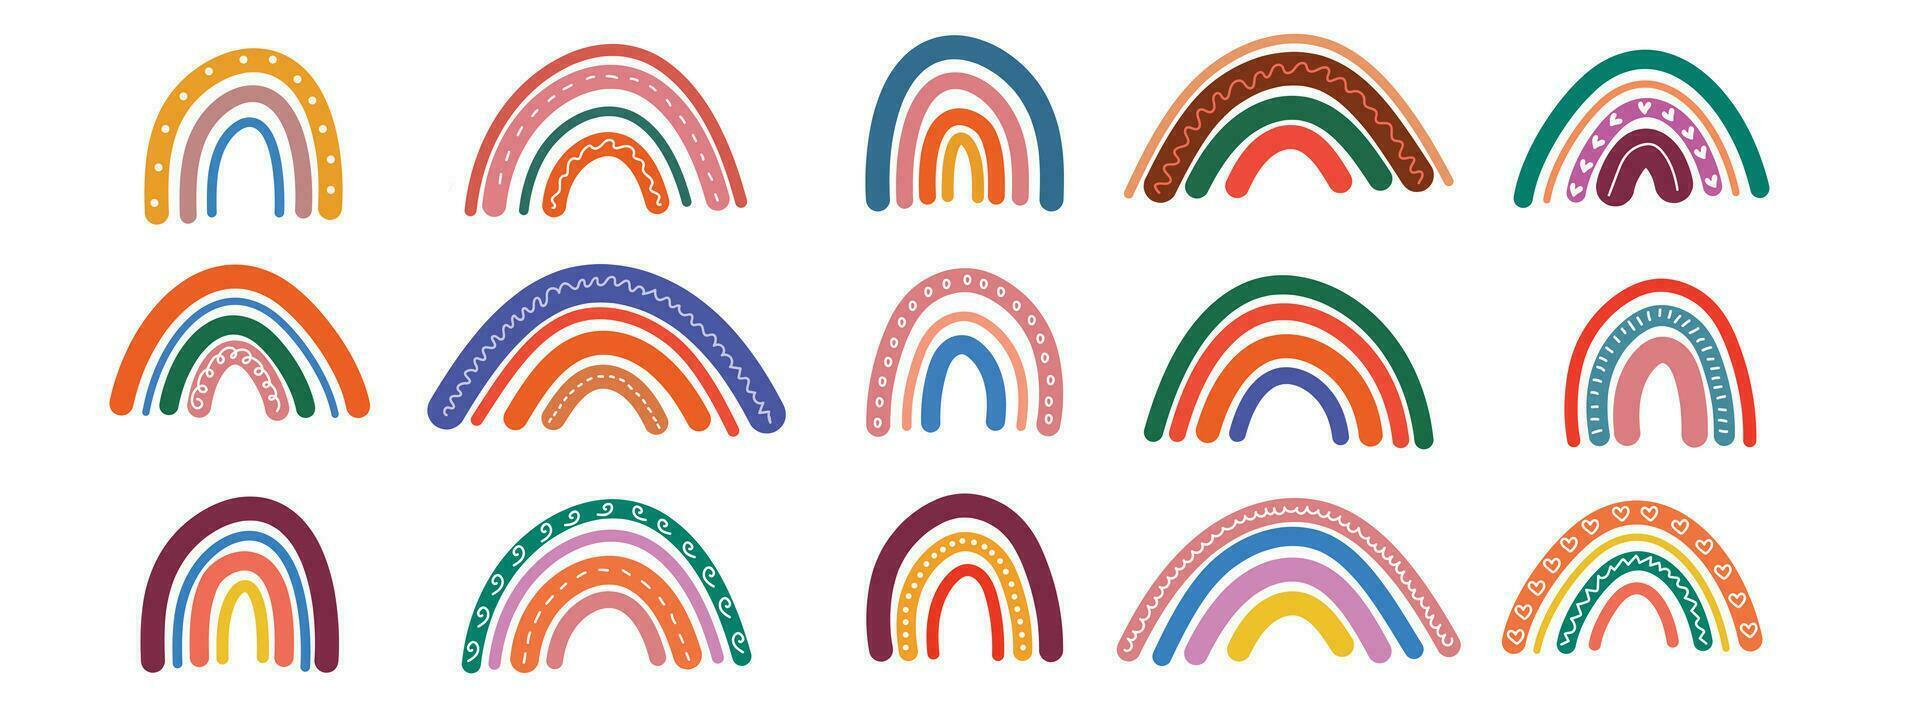 Hand drawn rainbows. Set of rainbows in Scandinavian style. vector